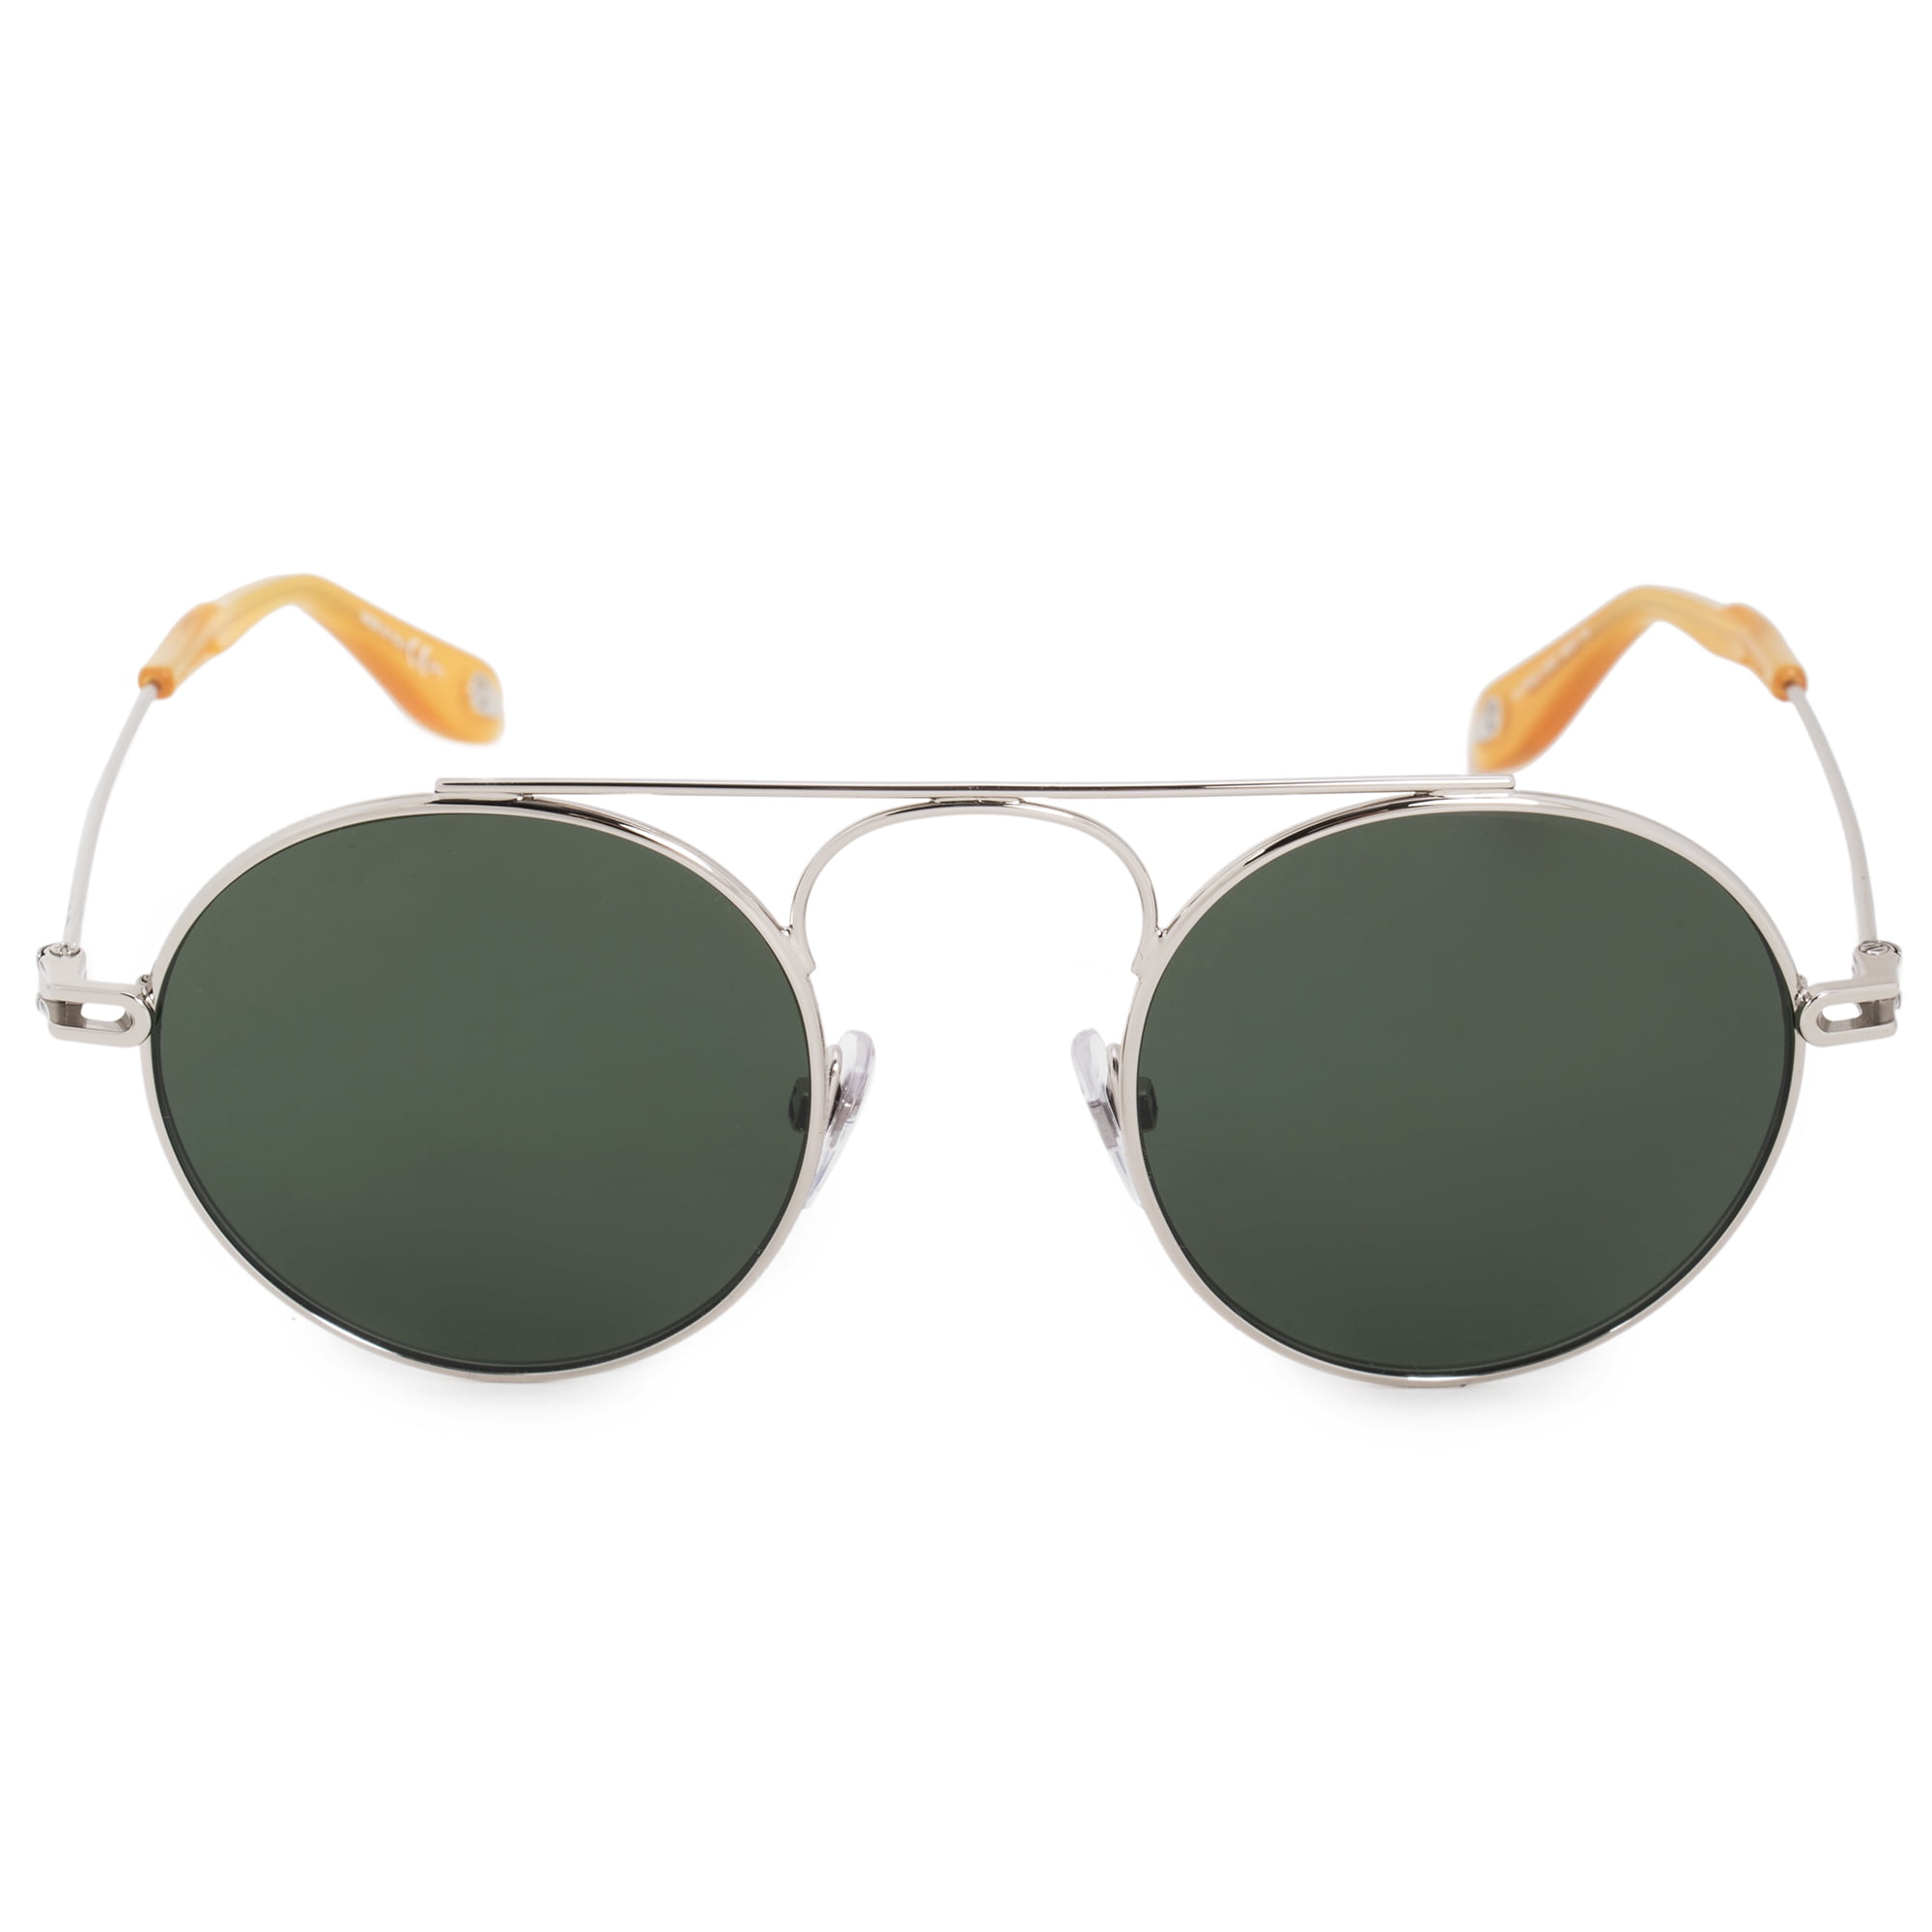 Givenchy Round Sunglasses GV7054/S 010 